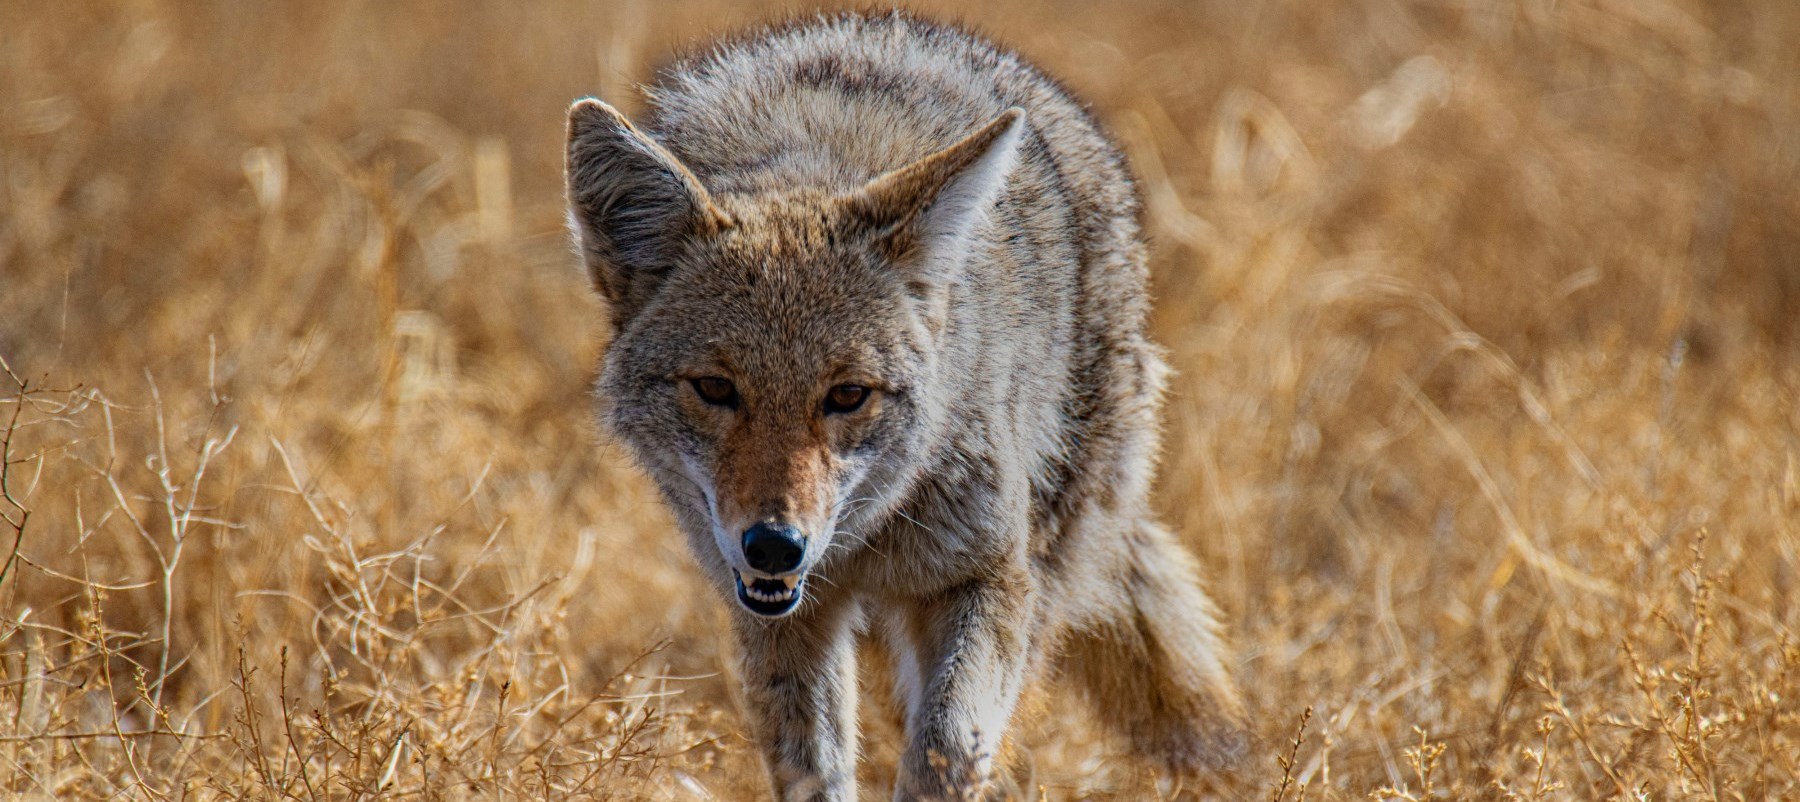 Coyote stalking in dry field